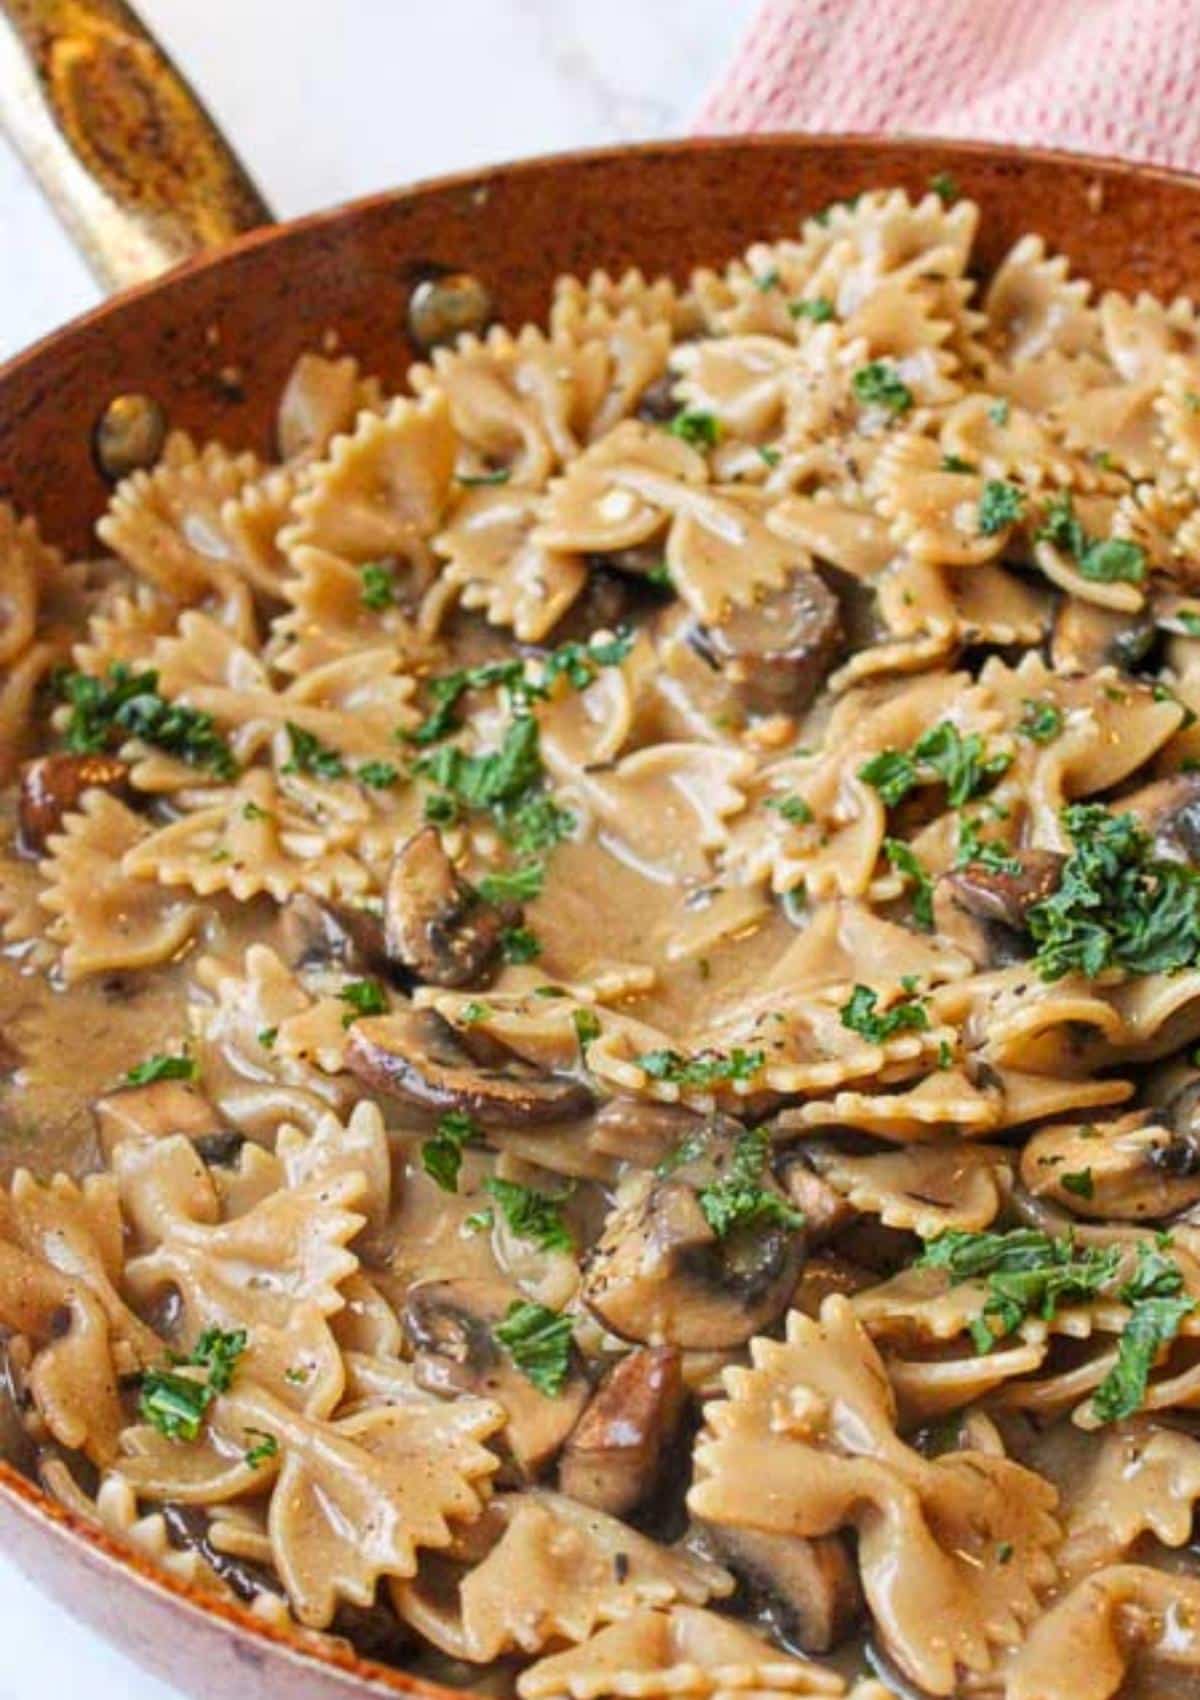 Creamy vegan mushroom pasta in a pan on the stove